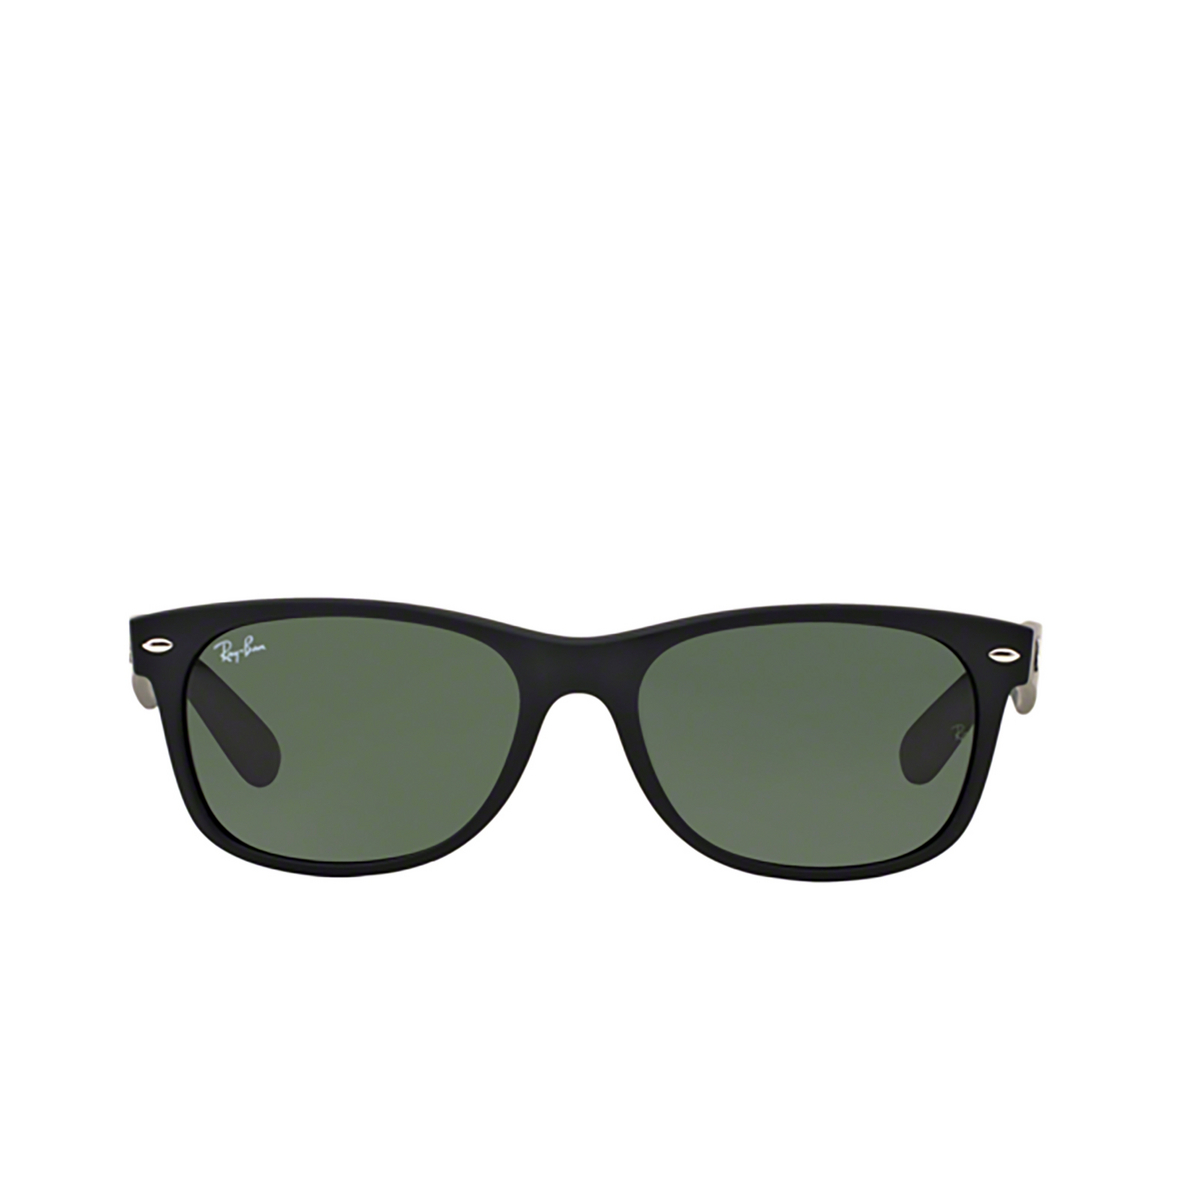 Ray-Ban NEW WAYFARER Sunglasses 622 RUBBER BLACK - front view